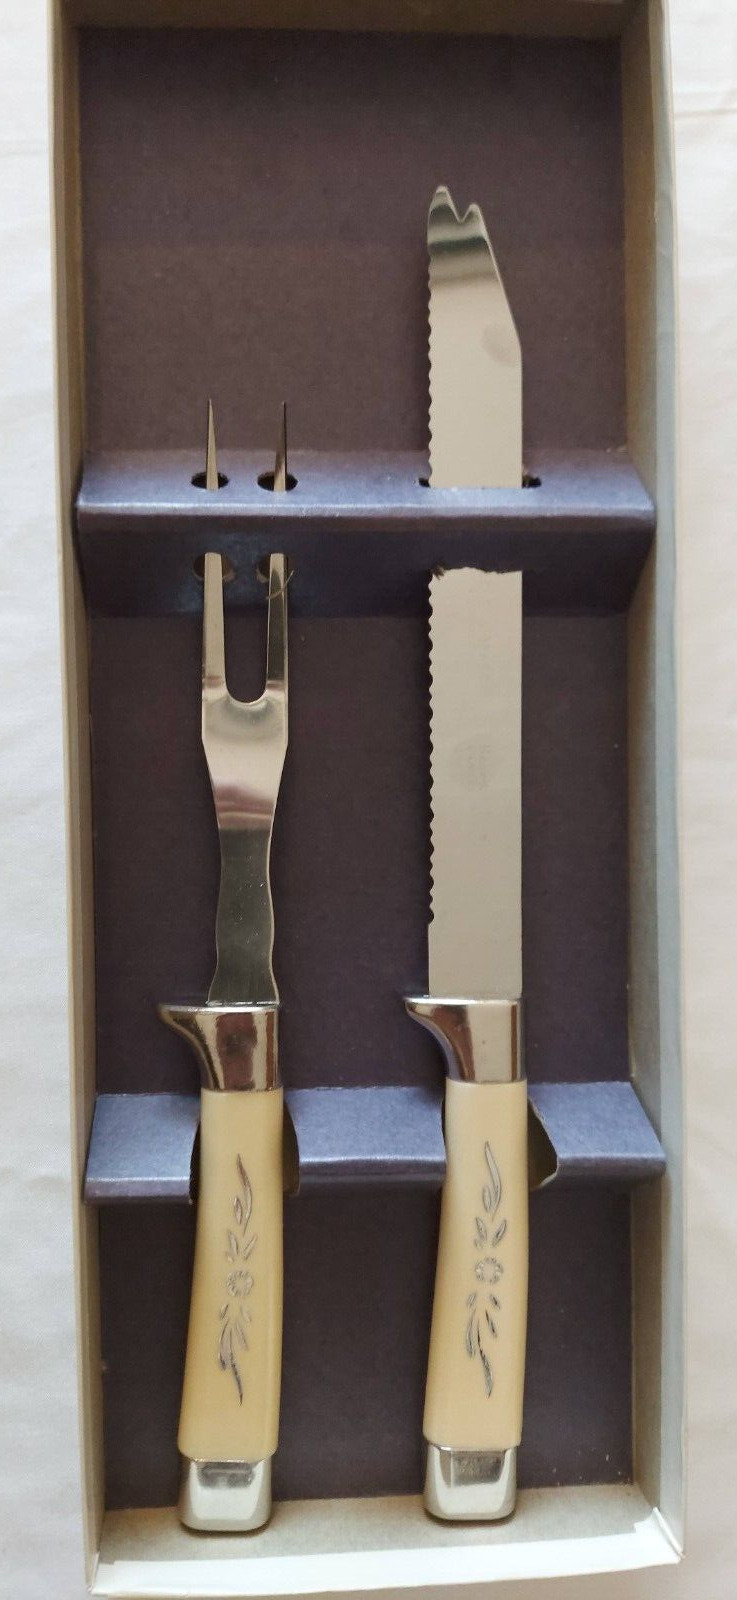 Sheffield Emdeko Cutlery Set 2 PC. Stainless Steel Carving Fork Knife Vintage